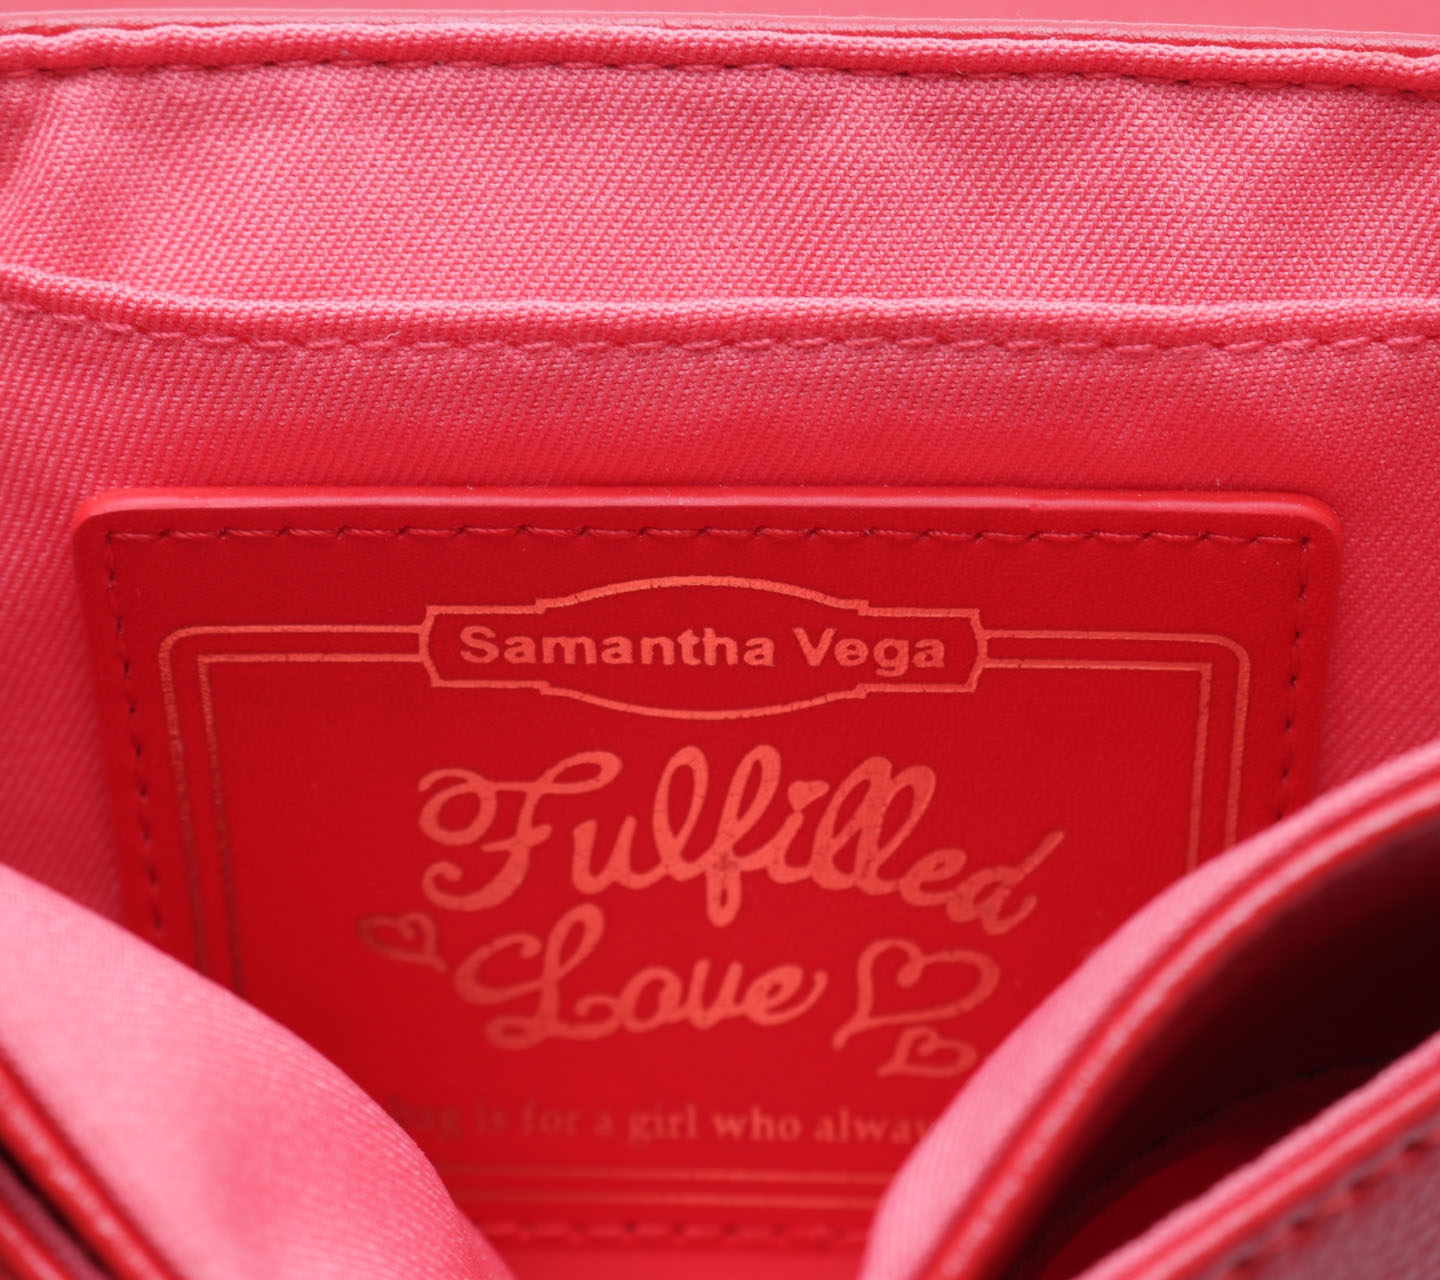 Samantha Vega Red Sling Bag